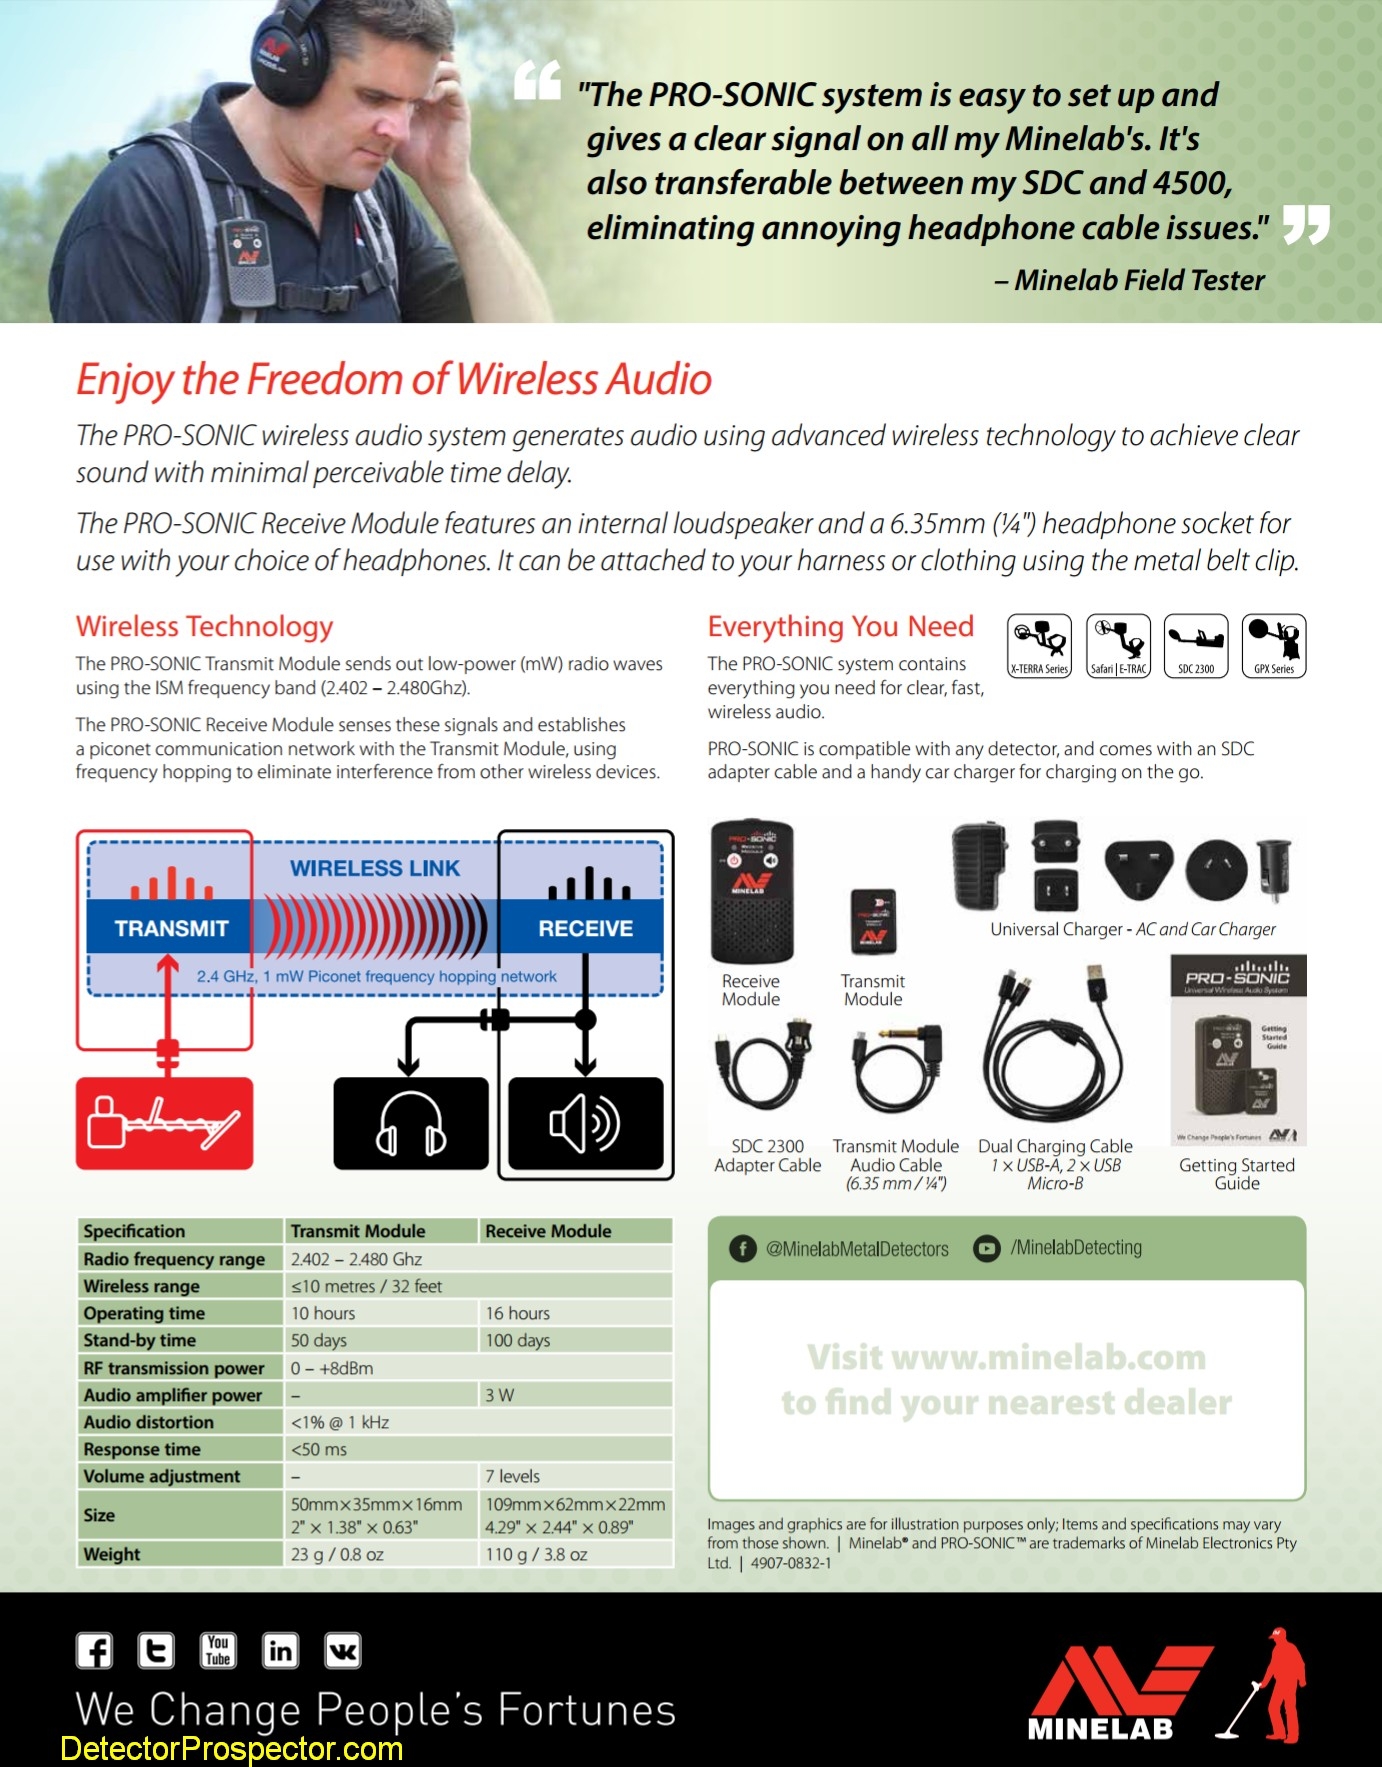 minelab-pro-sonic-wireless-detector-brochure-specifications.jpg